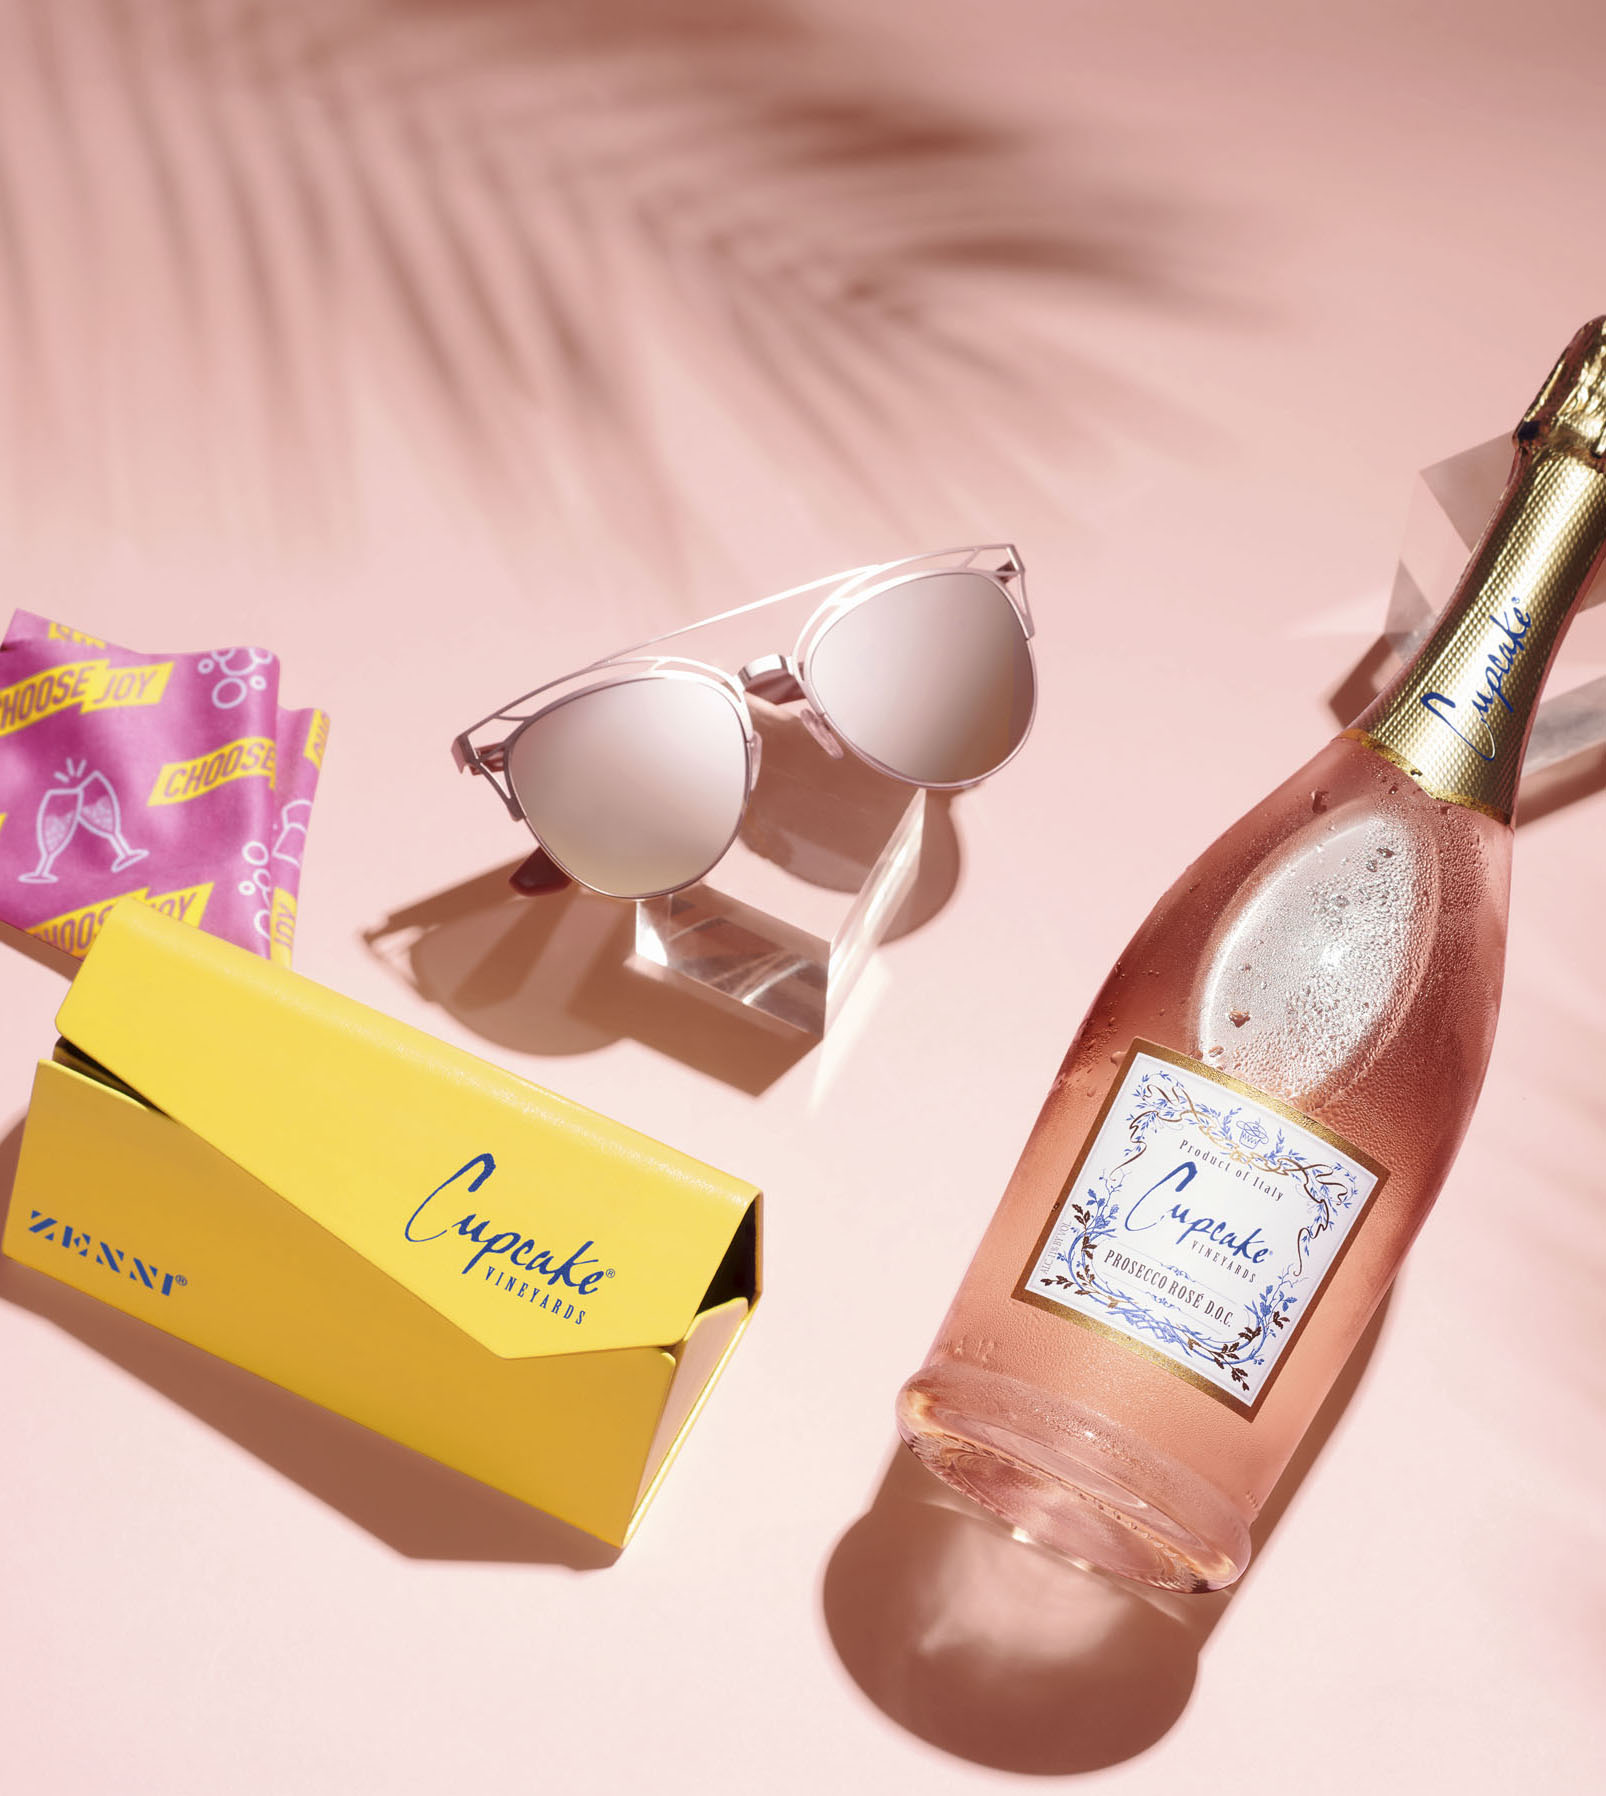 Cupcake Vineyards and Zenni sunglasses Prosecco Rose collaboration